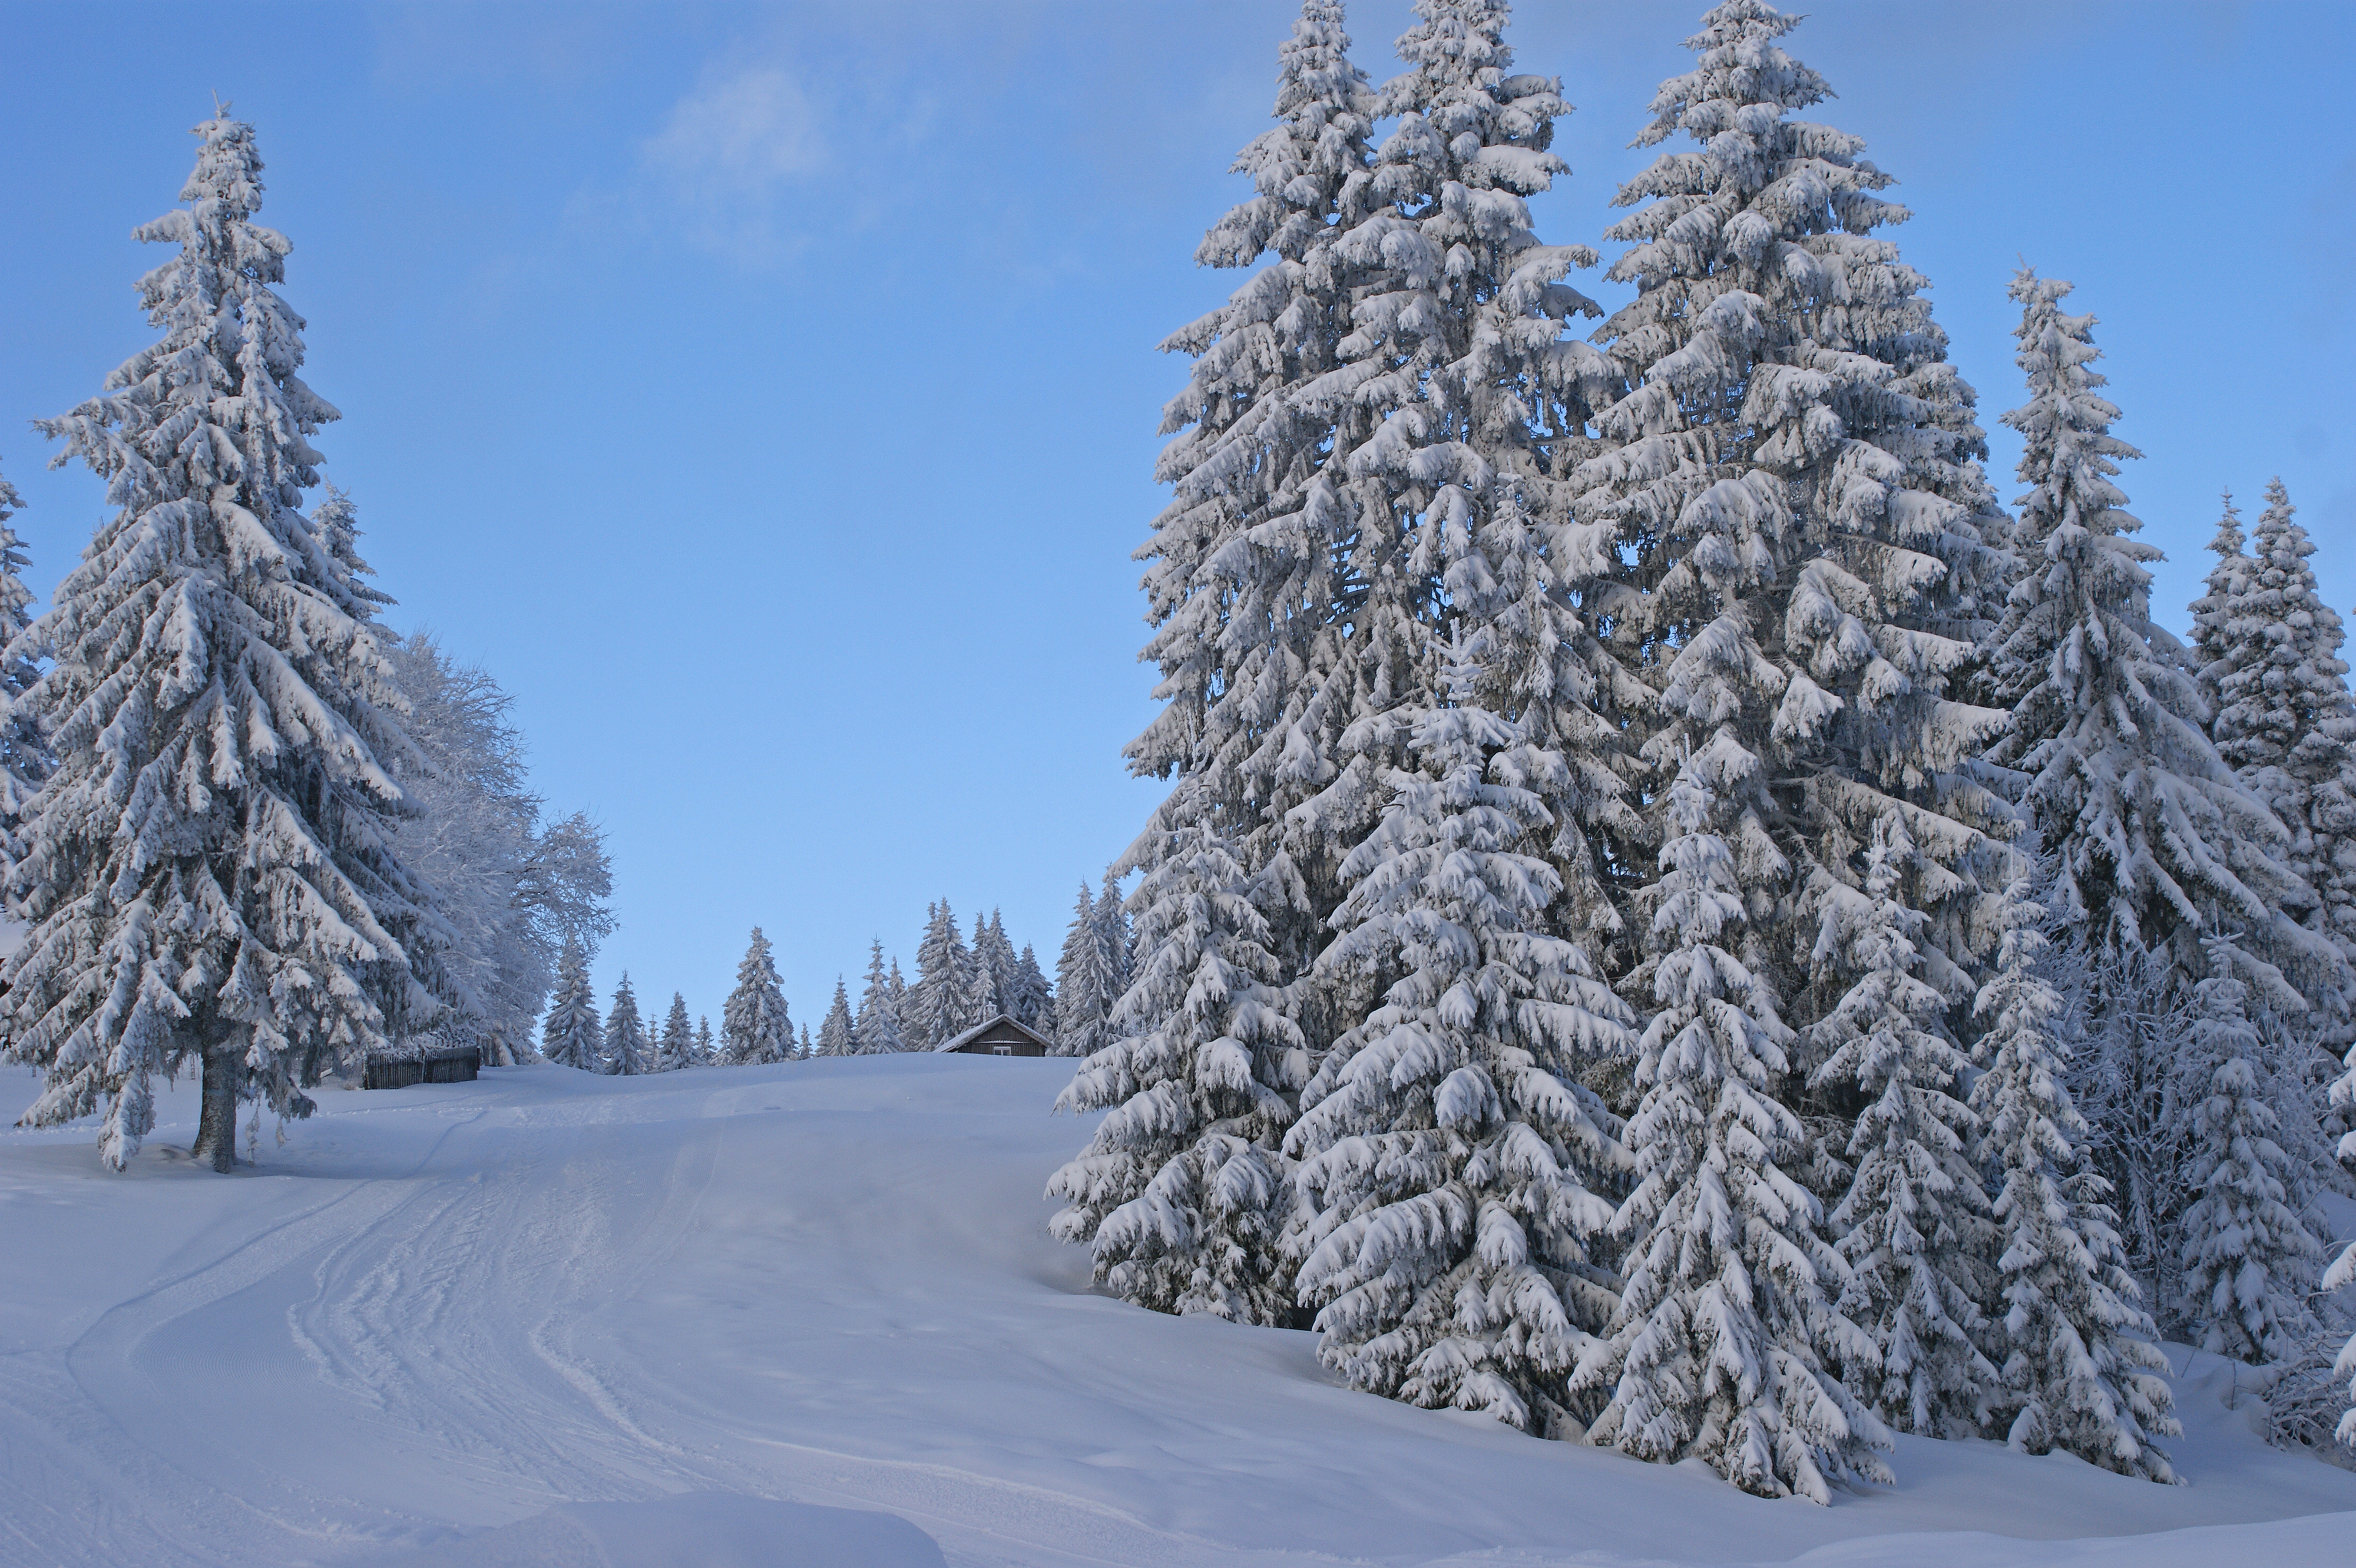 File:Winter scene (8435687527).jpg - Wikimedia Commons